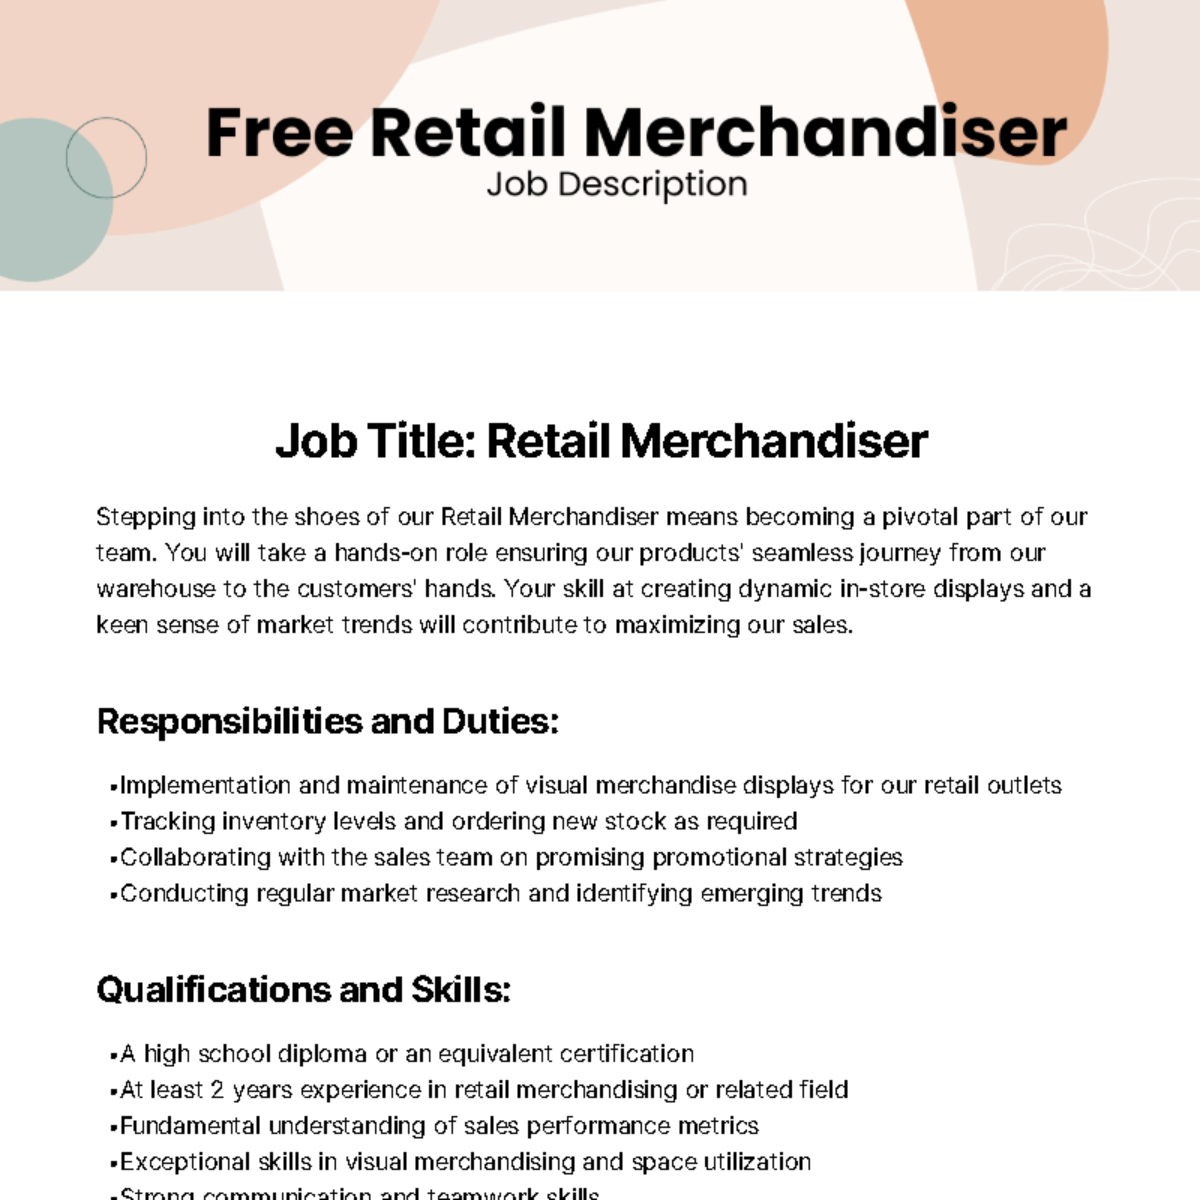 Free Retail Merchandiser Job Description Template